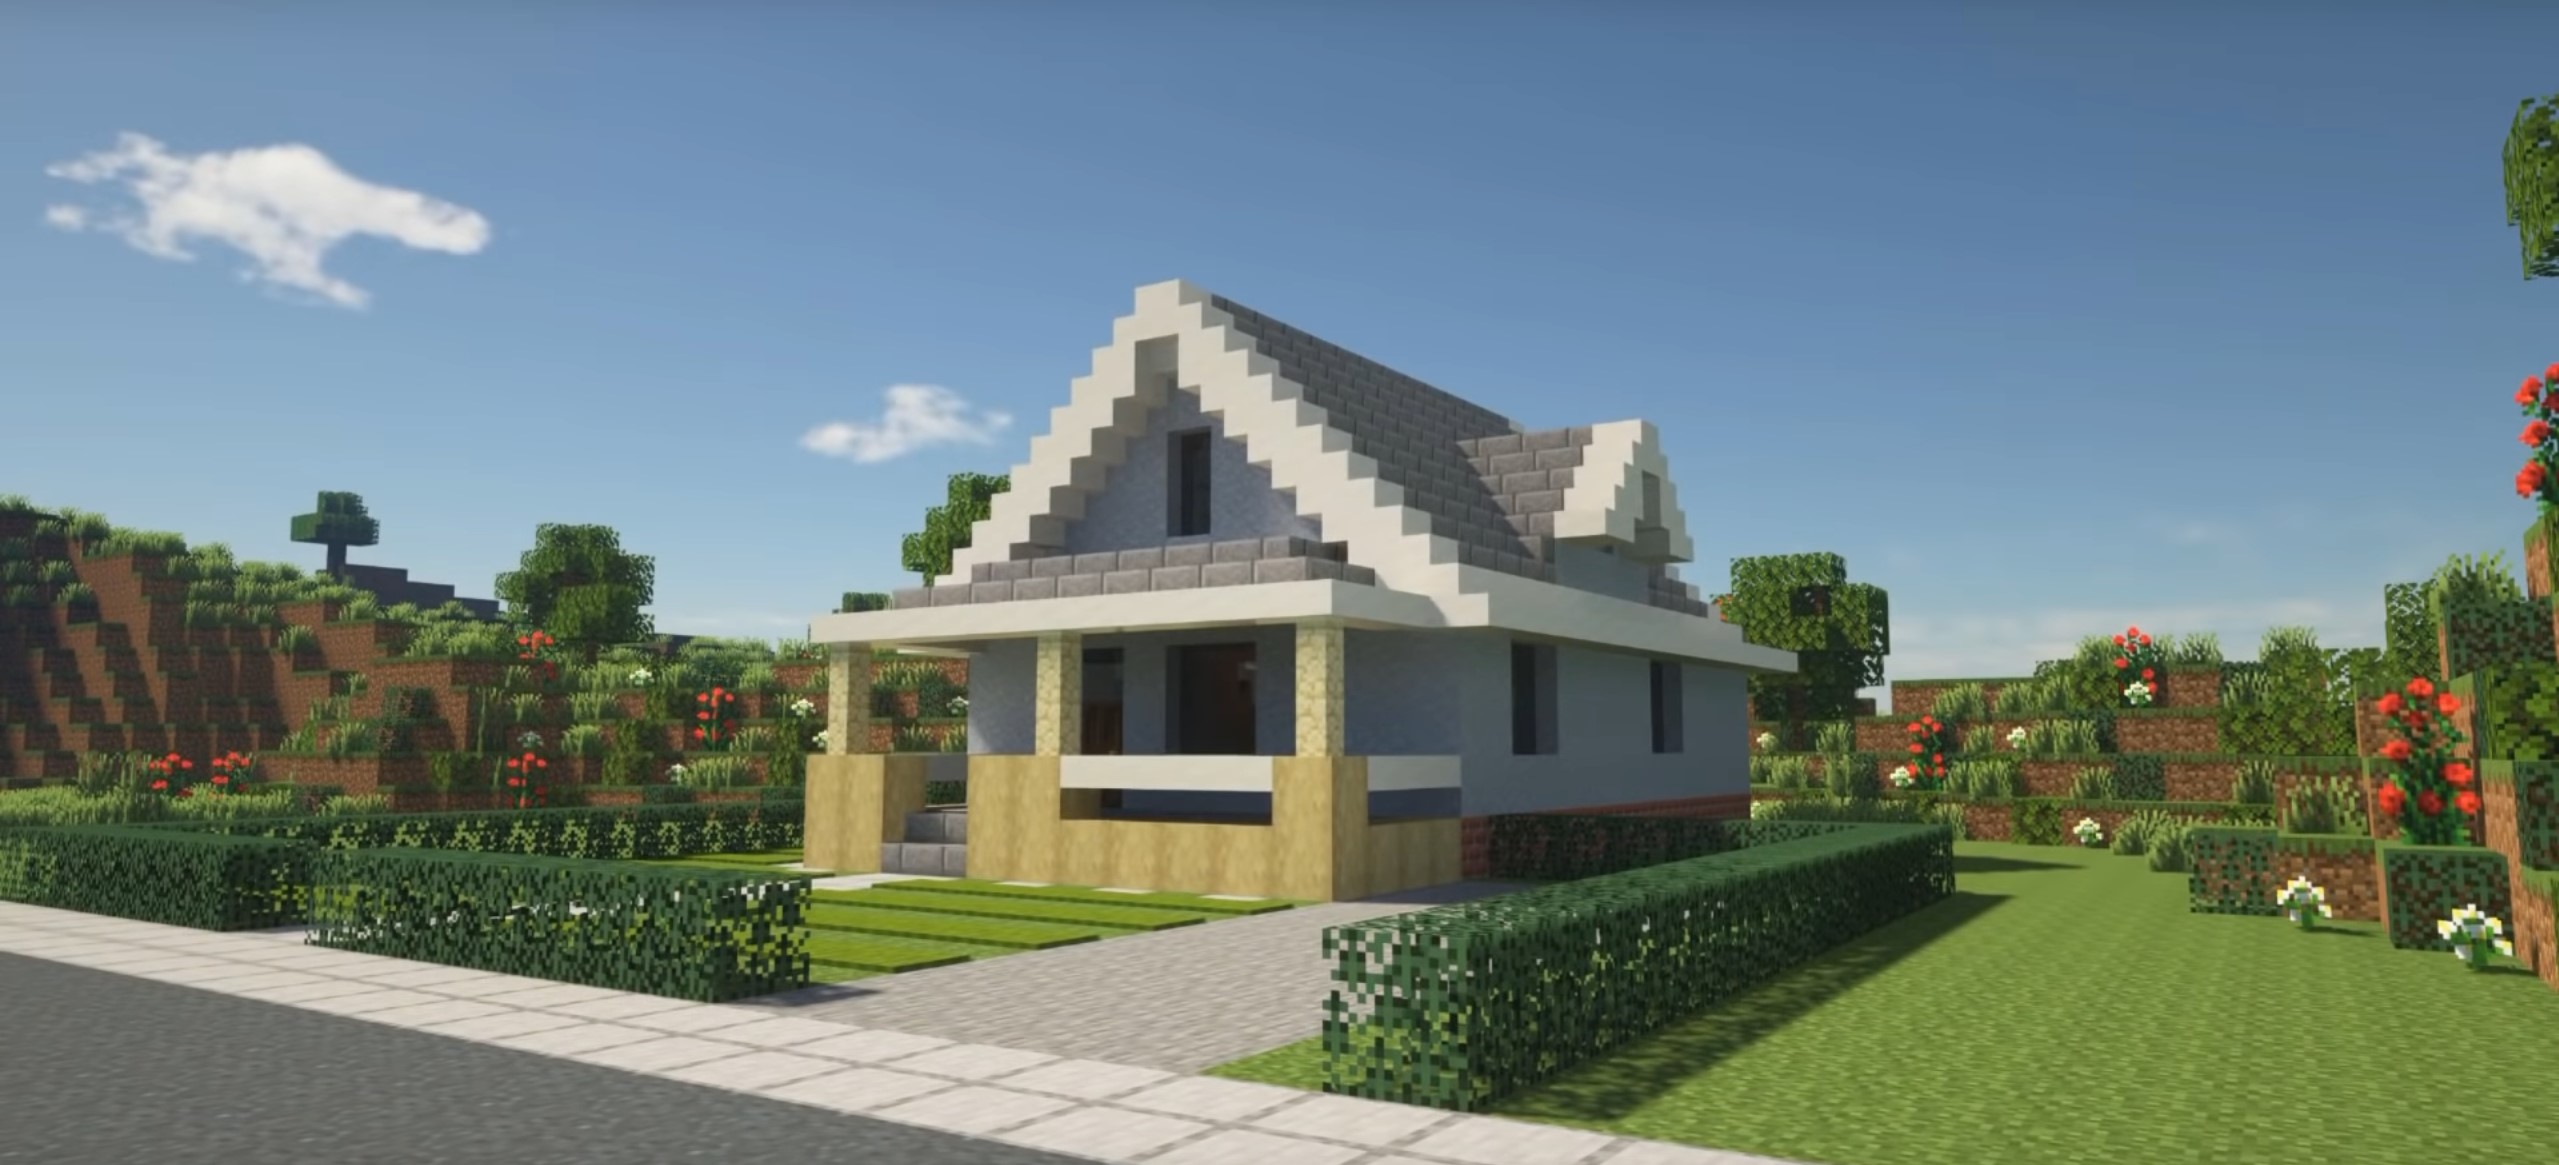 Small Suburban House minecraft building idea